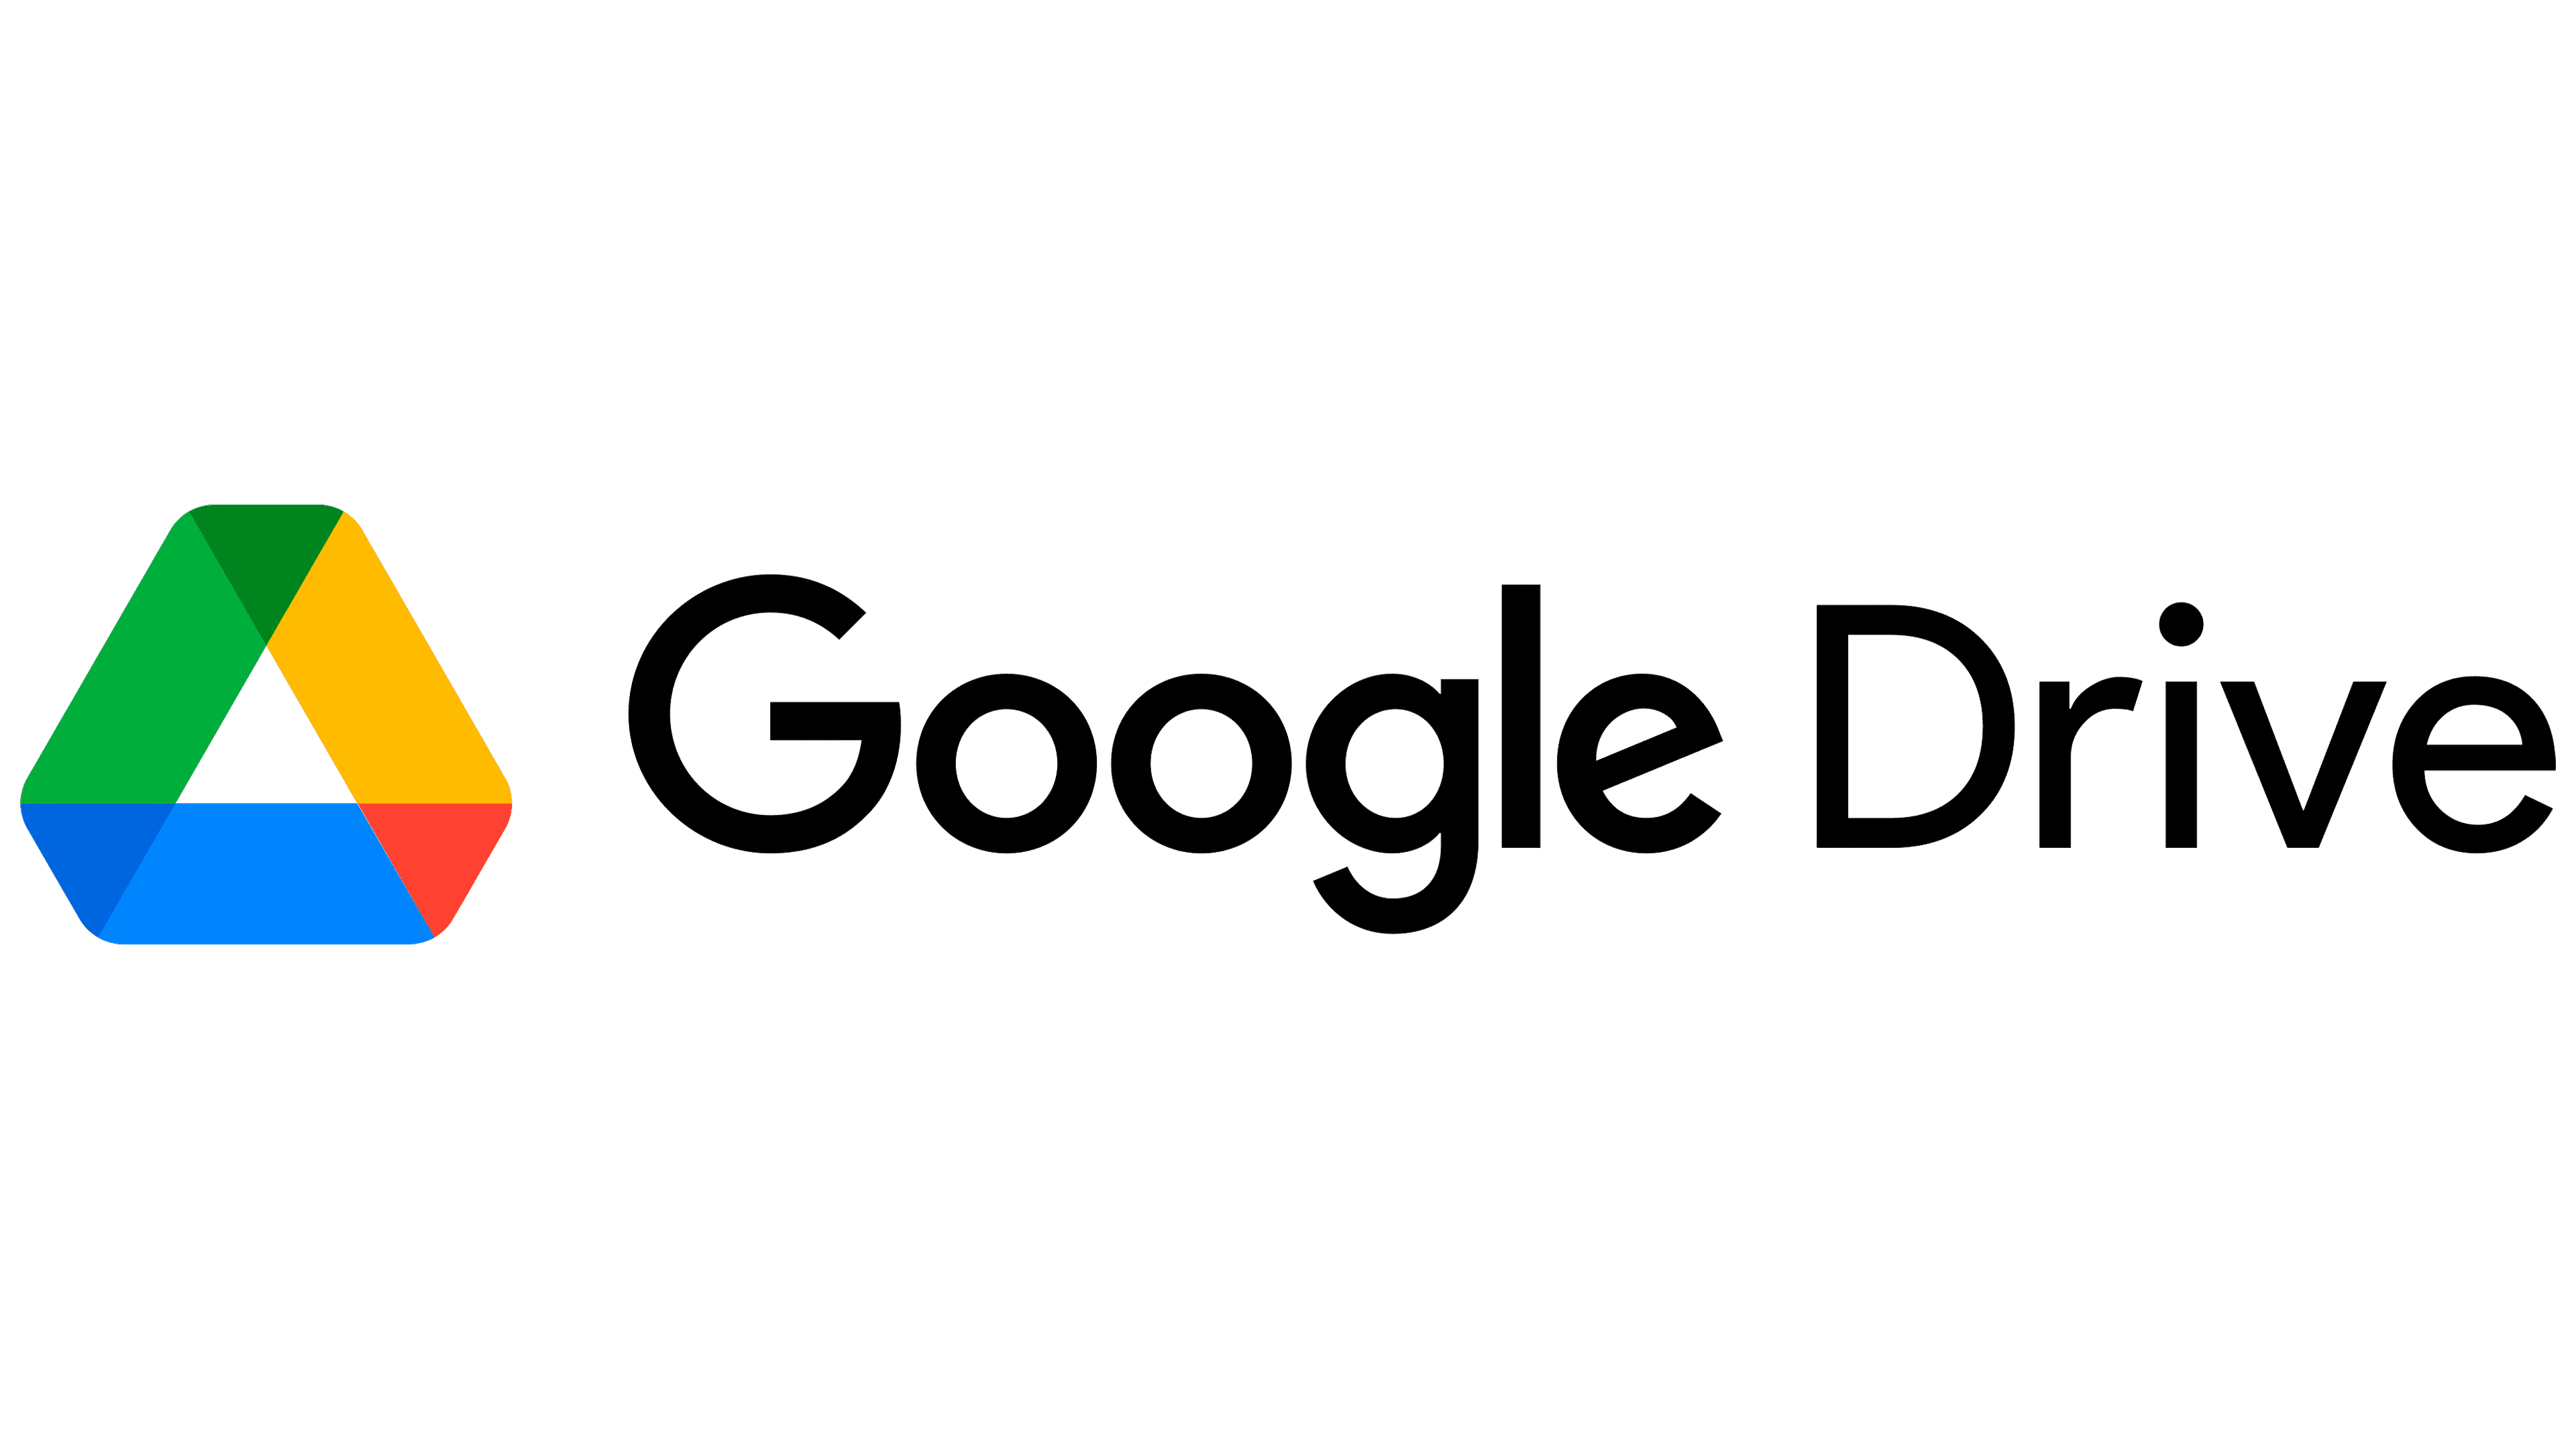 Картинка гугл диска. Google Drive. Google логотип. Гугл диск иконка. Google диск картинка.